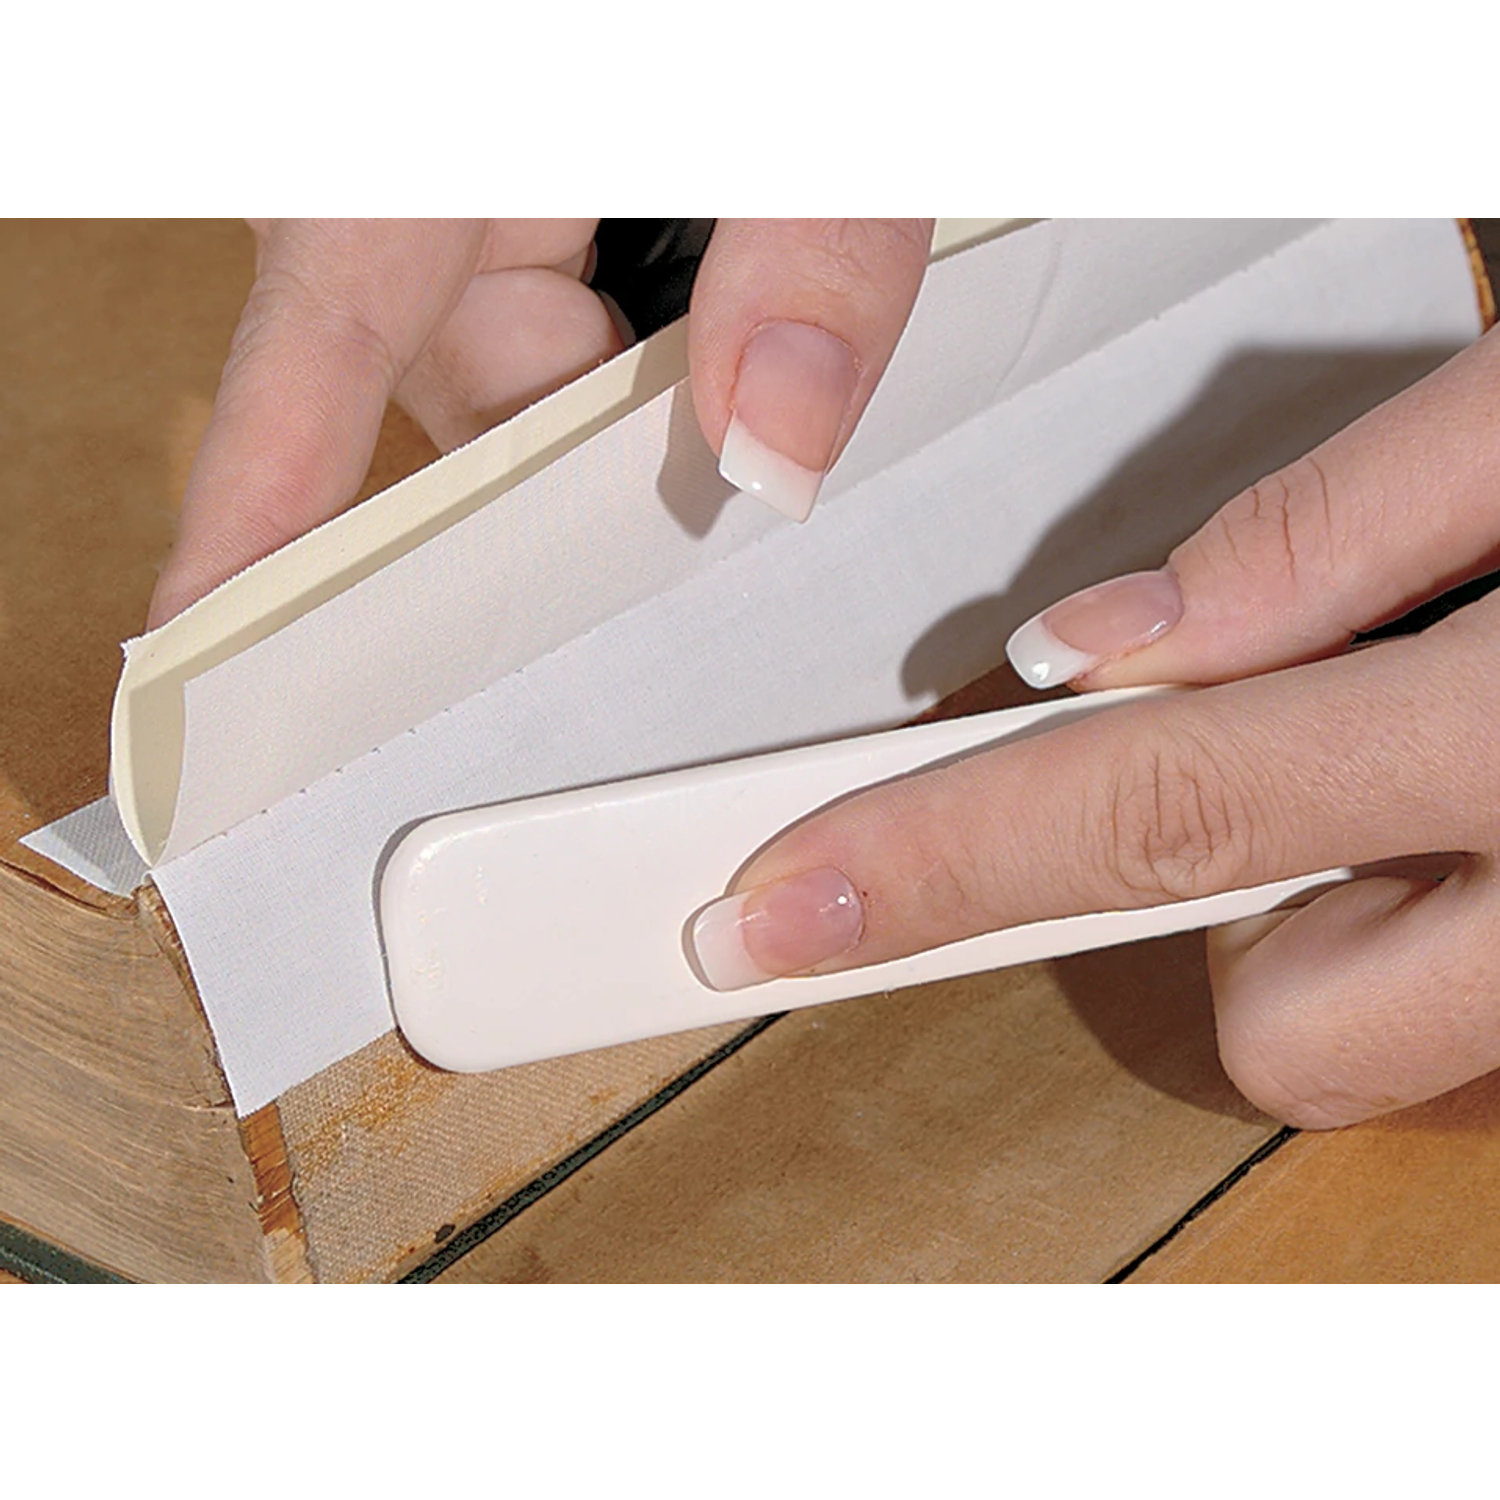 TEHAUX 30pcs Mesh Tape Book Glue Binding Repair Book Binding Tape Glue  Strip Craft Tape for Scrapbooking Book Binding Glue Spine Office Supply  Book